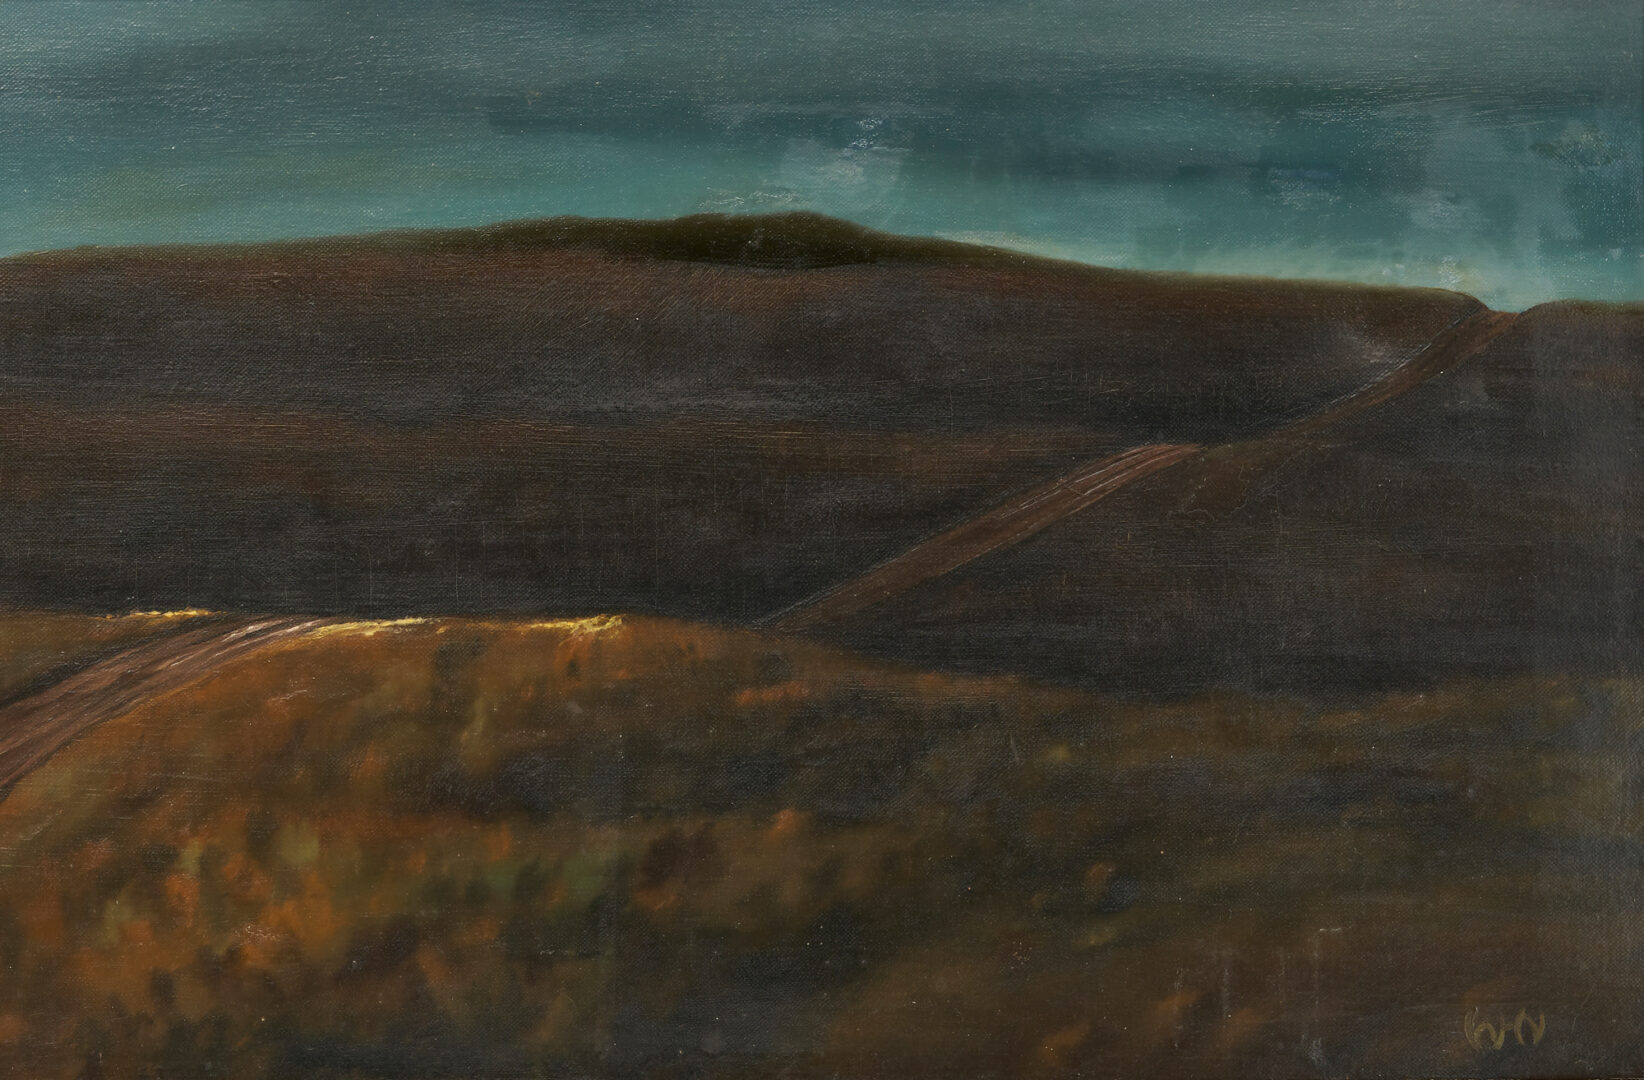 Lot 881: Ward Nichols O/C Panoramic Landscape Painting, Hill Top